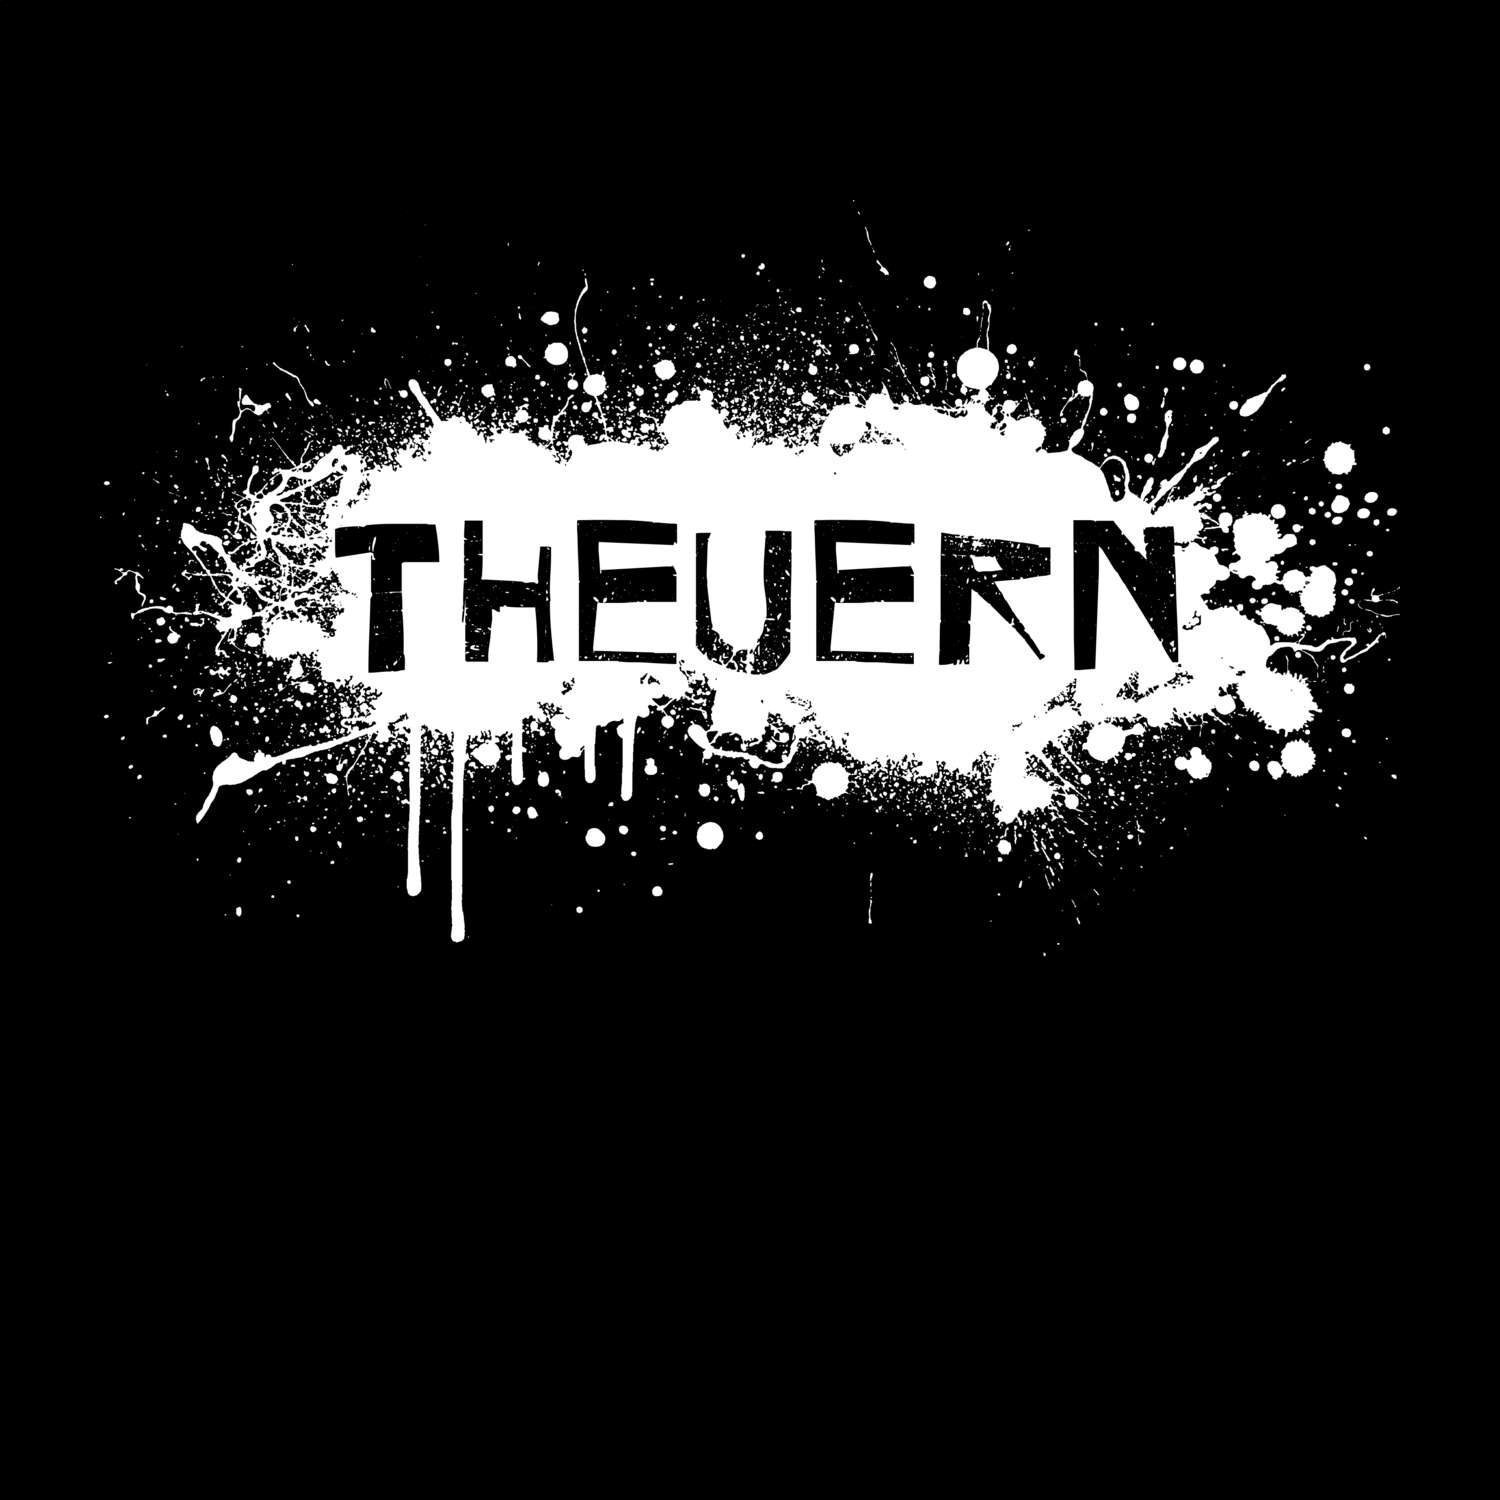 Theuern T-Shirt »Paint Splash Punk«